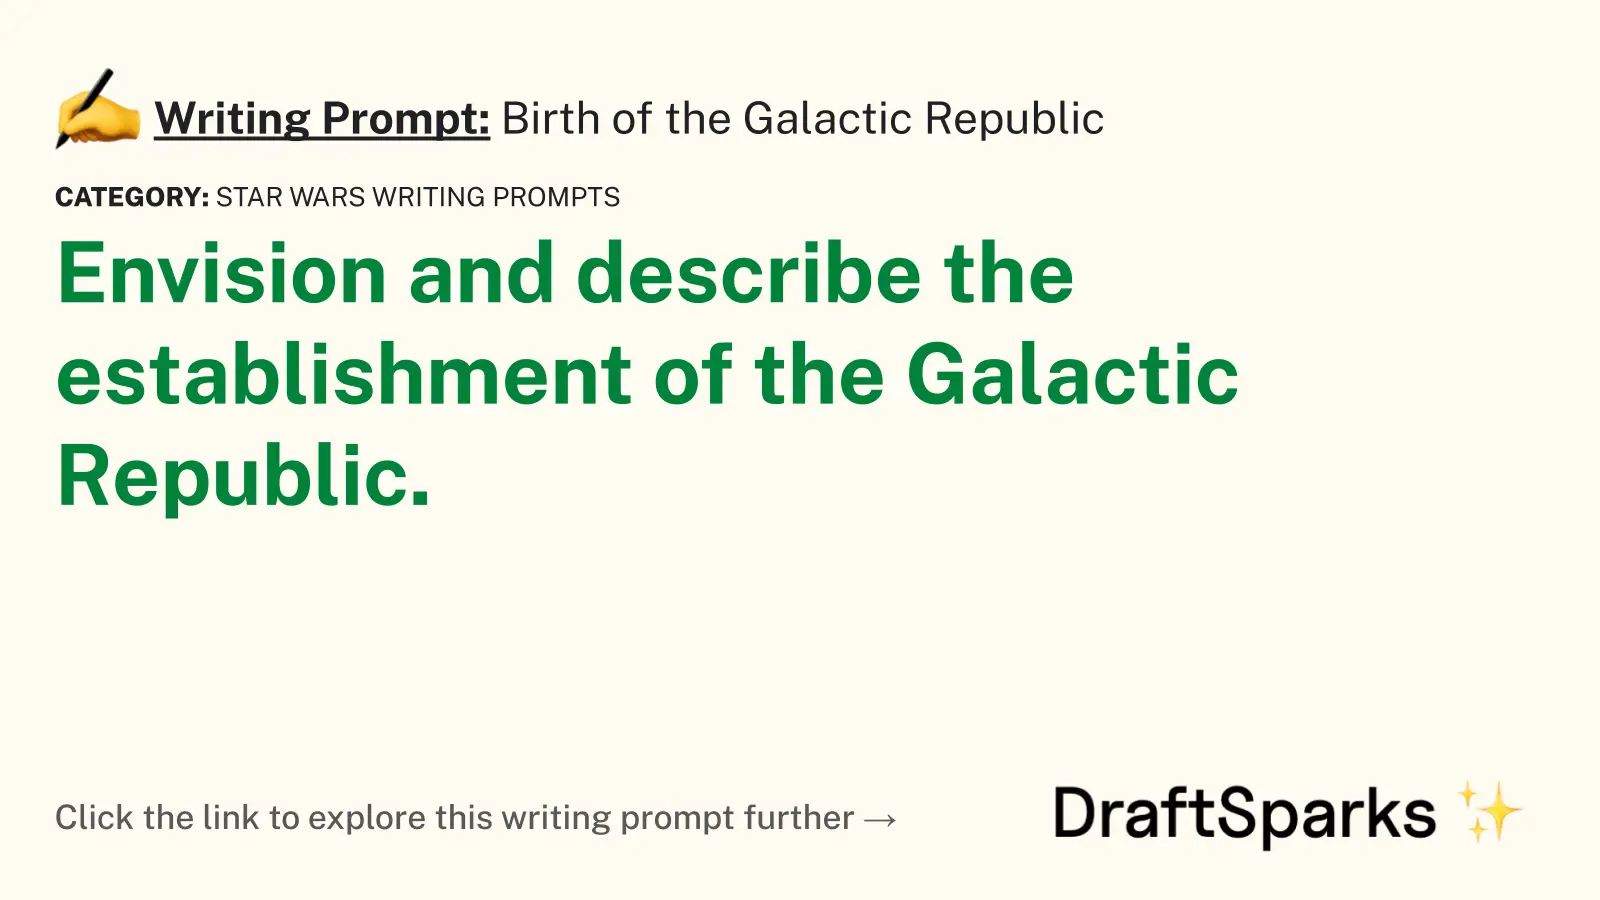 Birth of the Galactic Republic